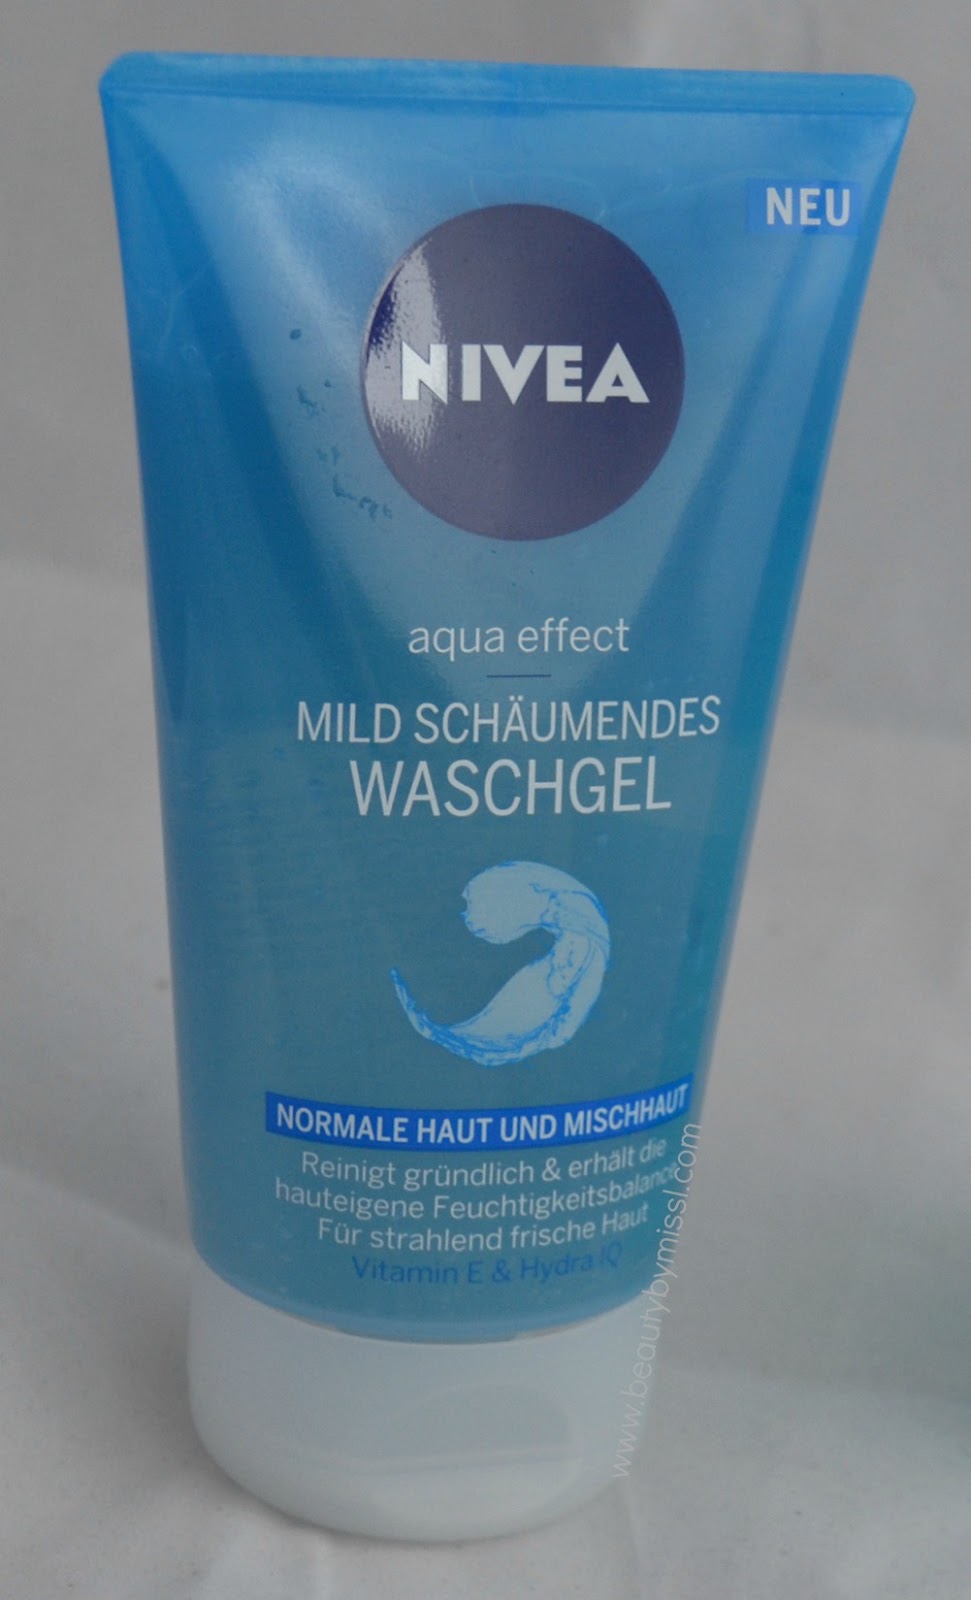 Nivea Aqua Effect face wash